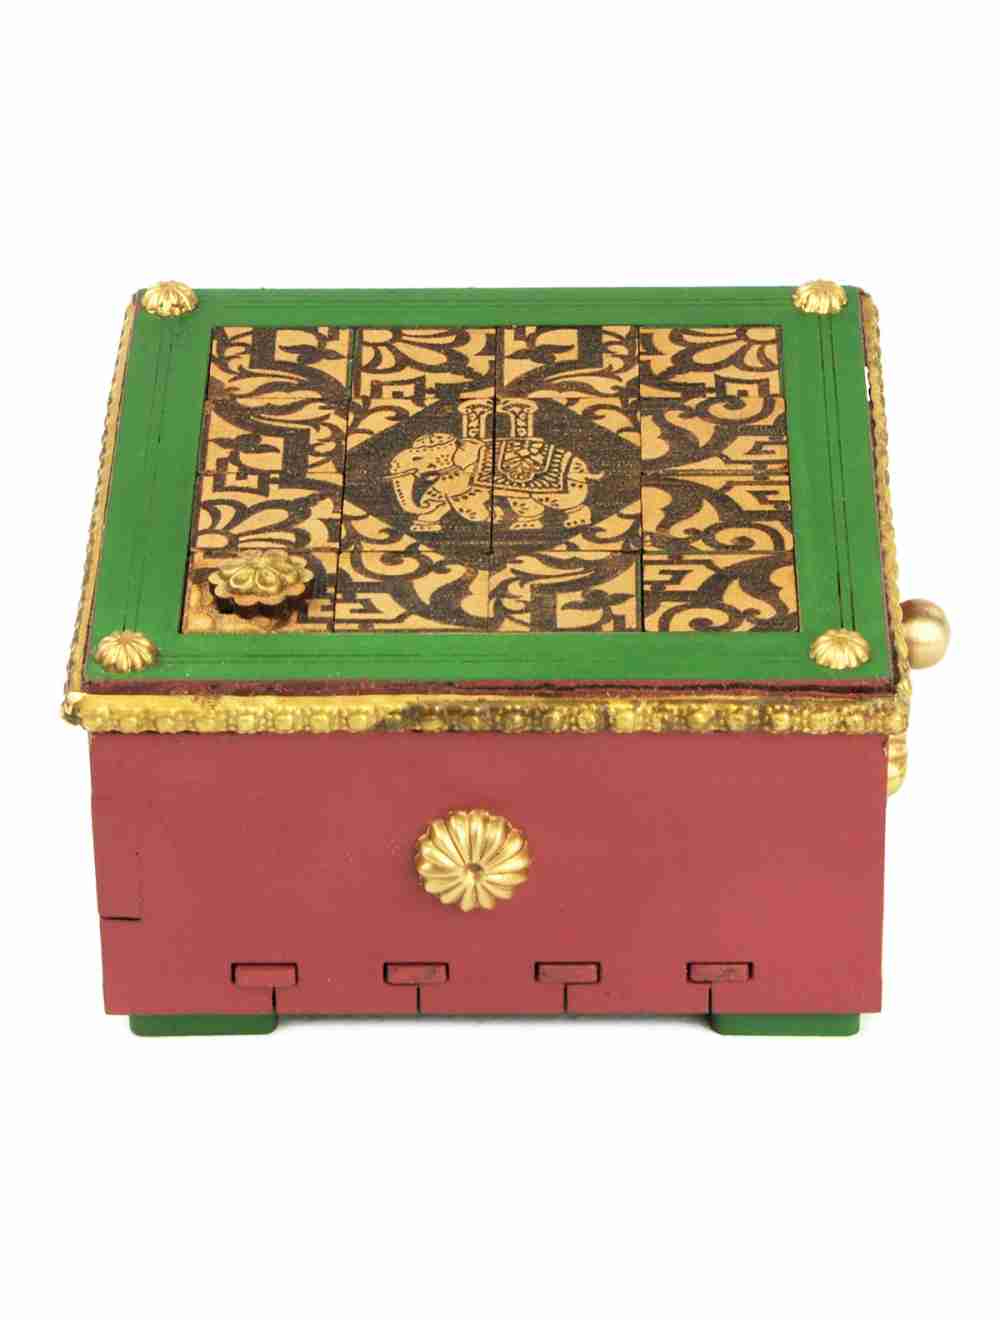 Elephant trick box wooden puzzle